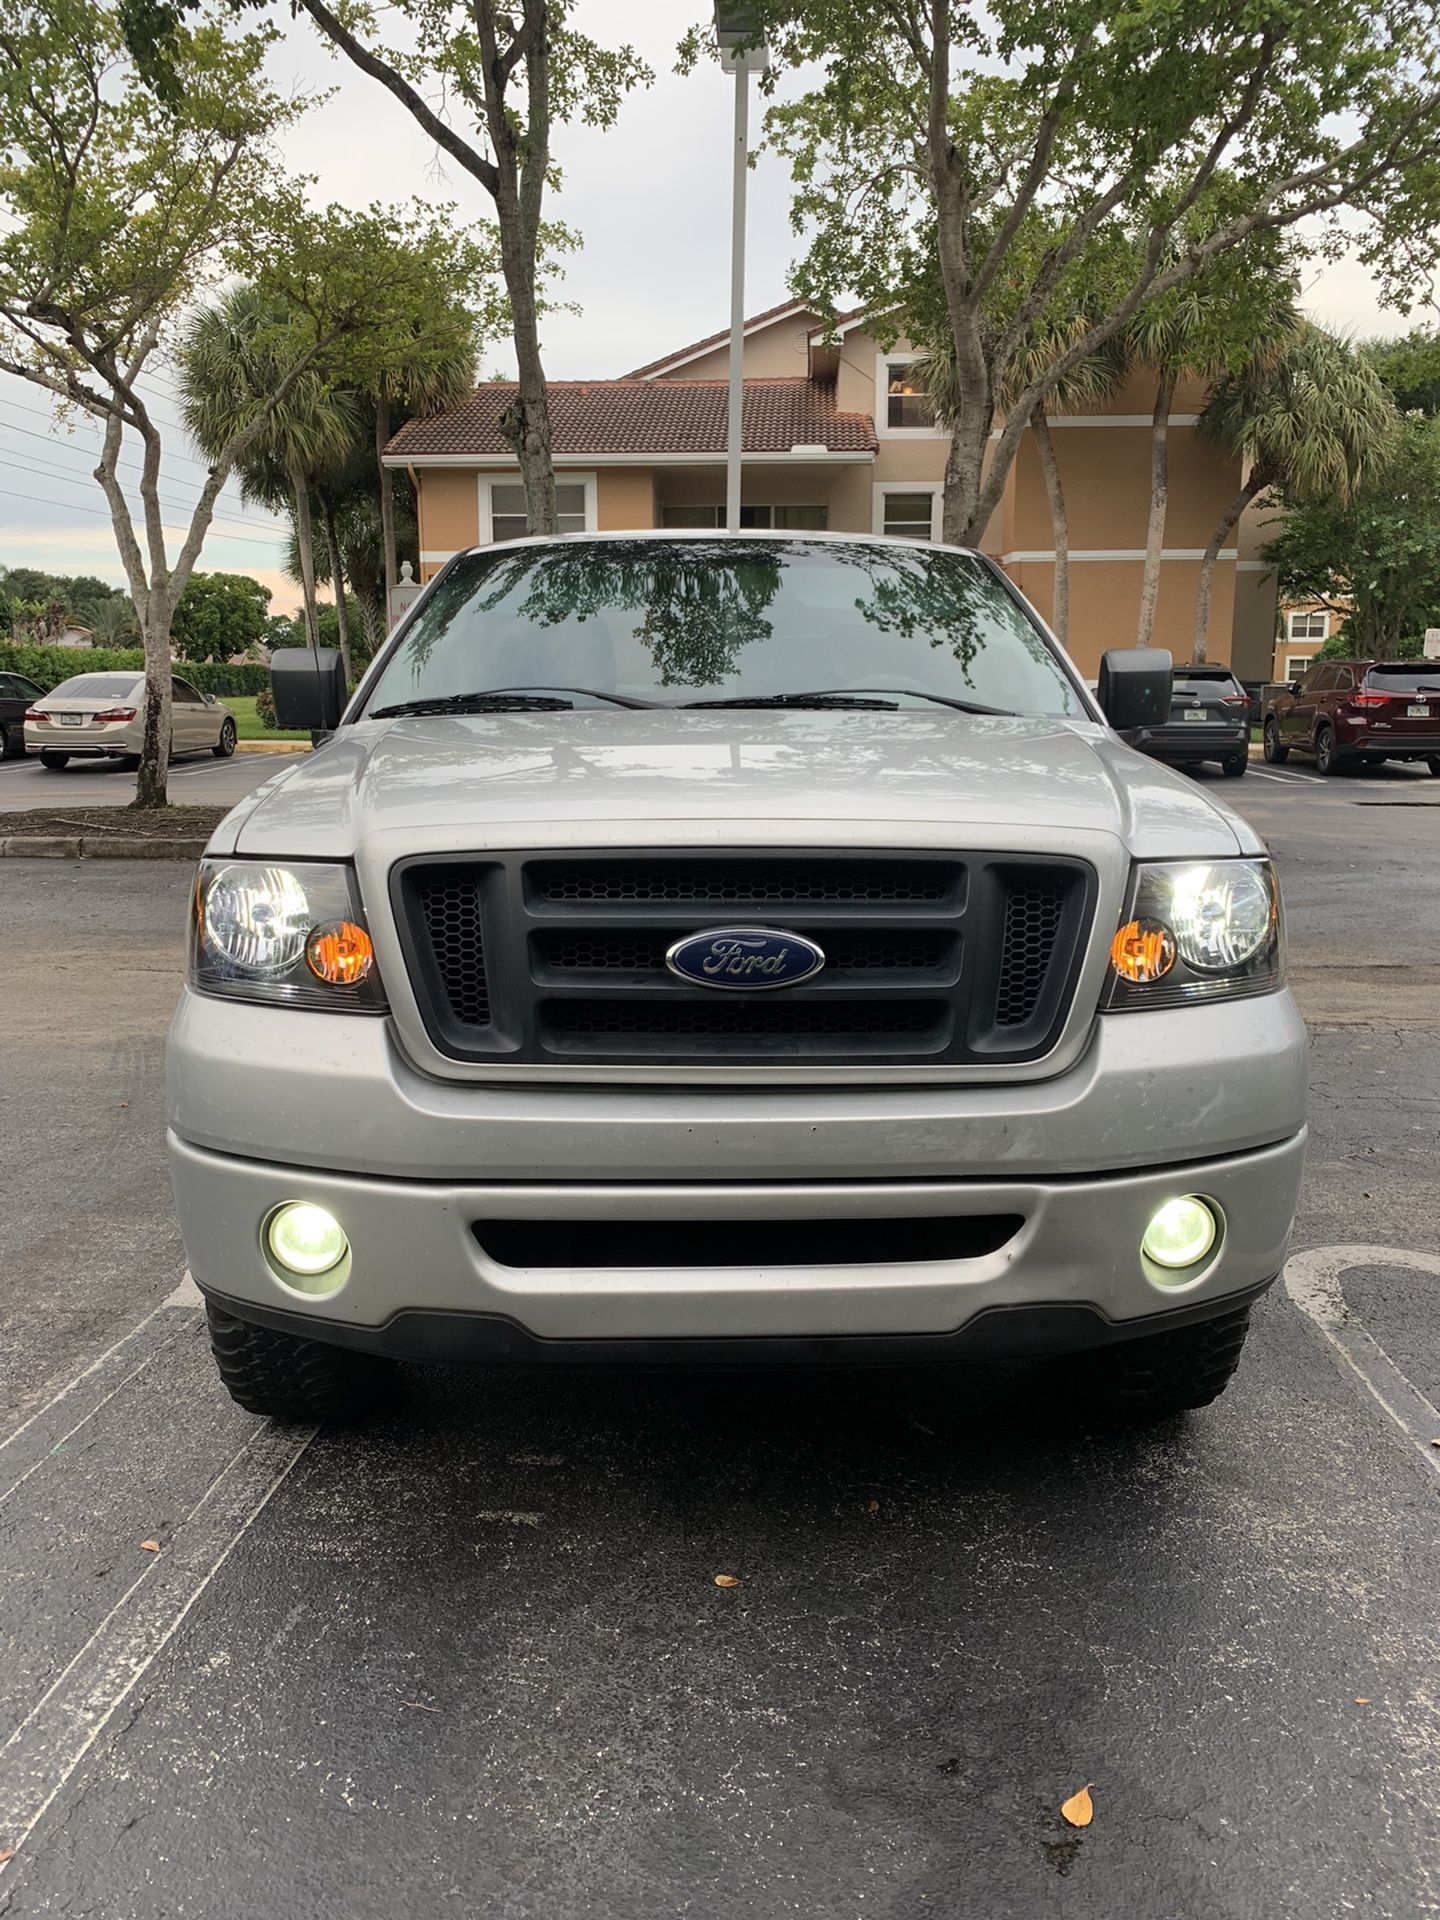 H13 9008 LED Headlight+9145 Lights 2004-2014 Ford  F-150